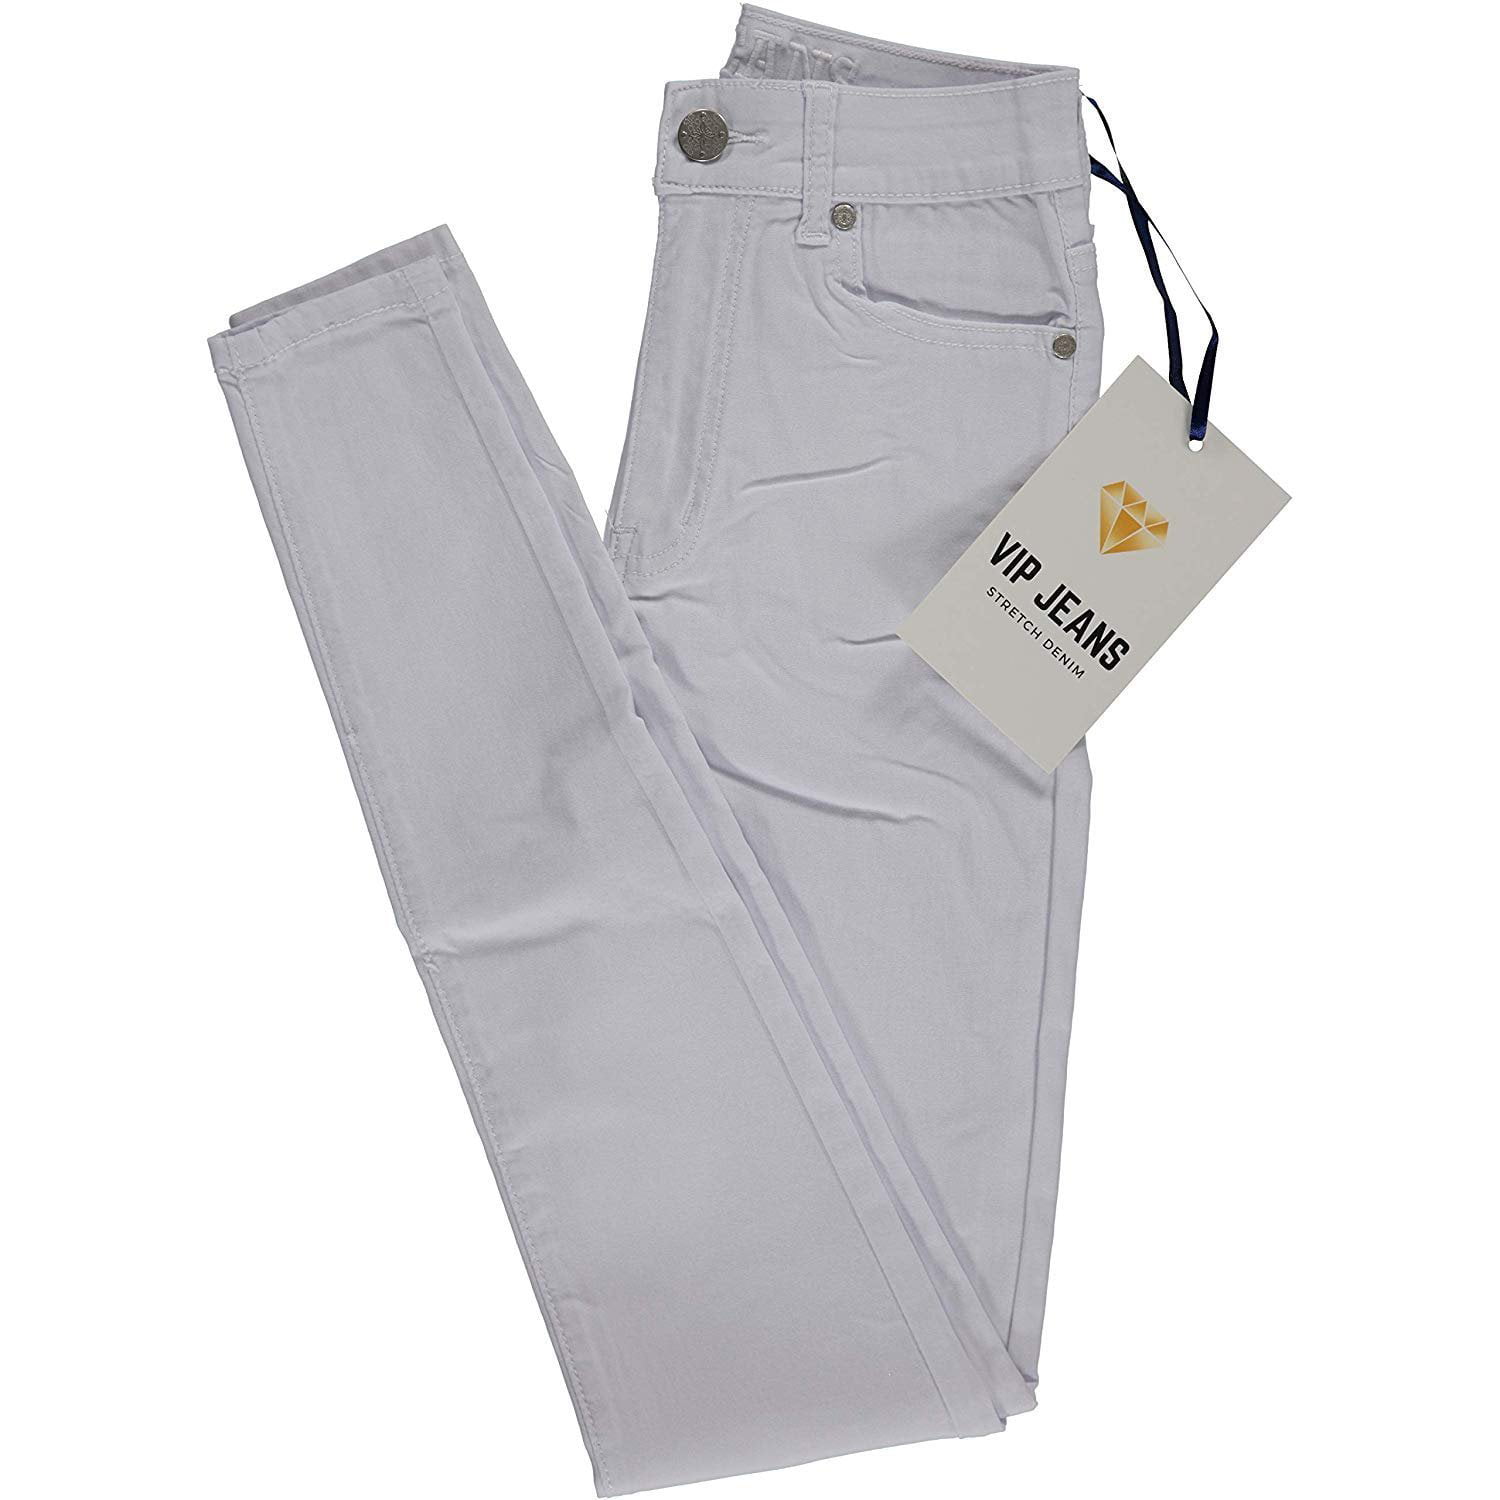 Comptoir des Cotonniers 34 Cigarette Pants Wax Shiny Skinny Pockets Jeans  Red | eBay